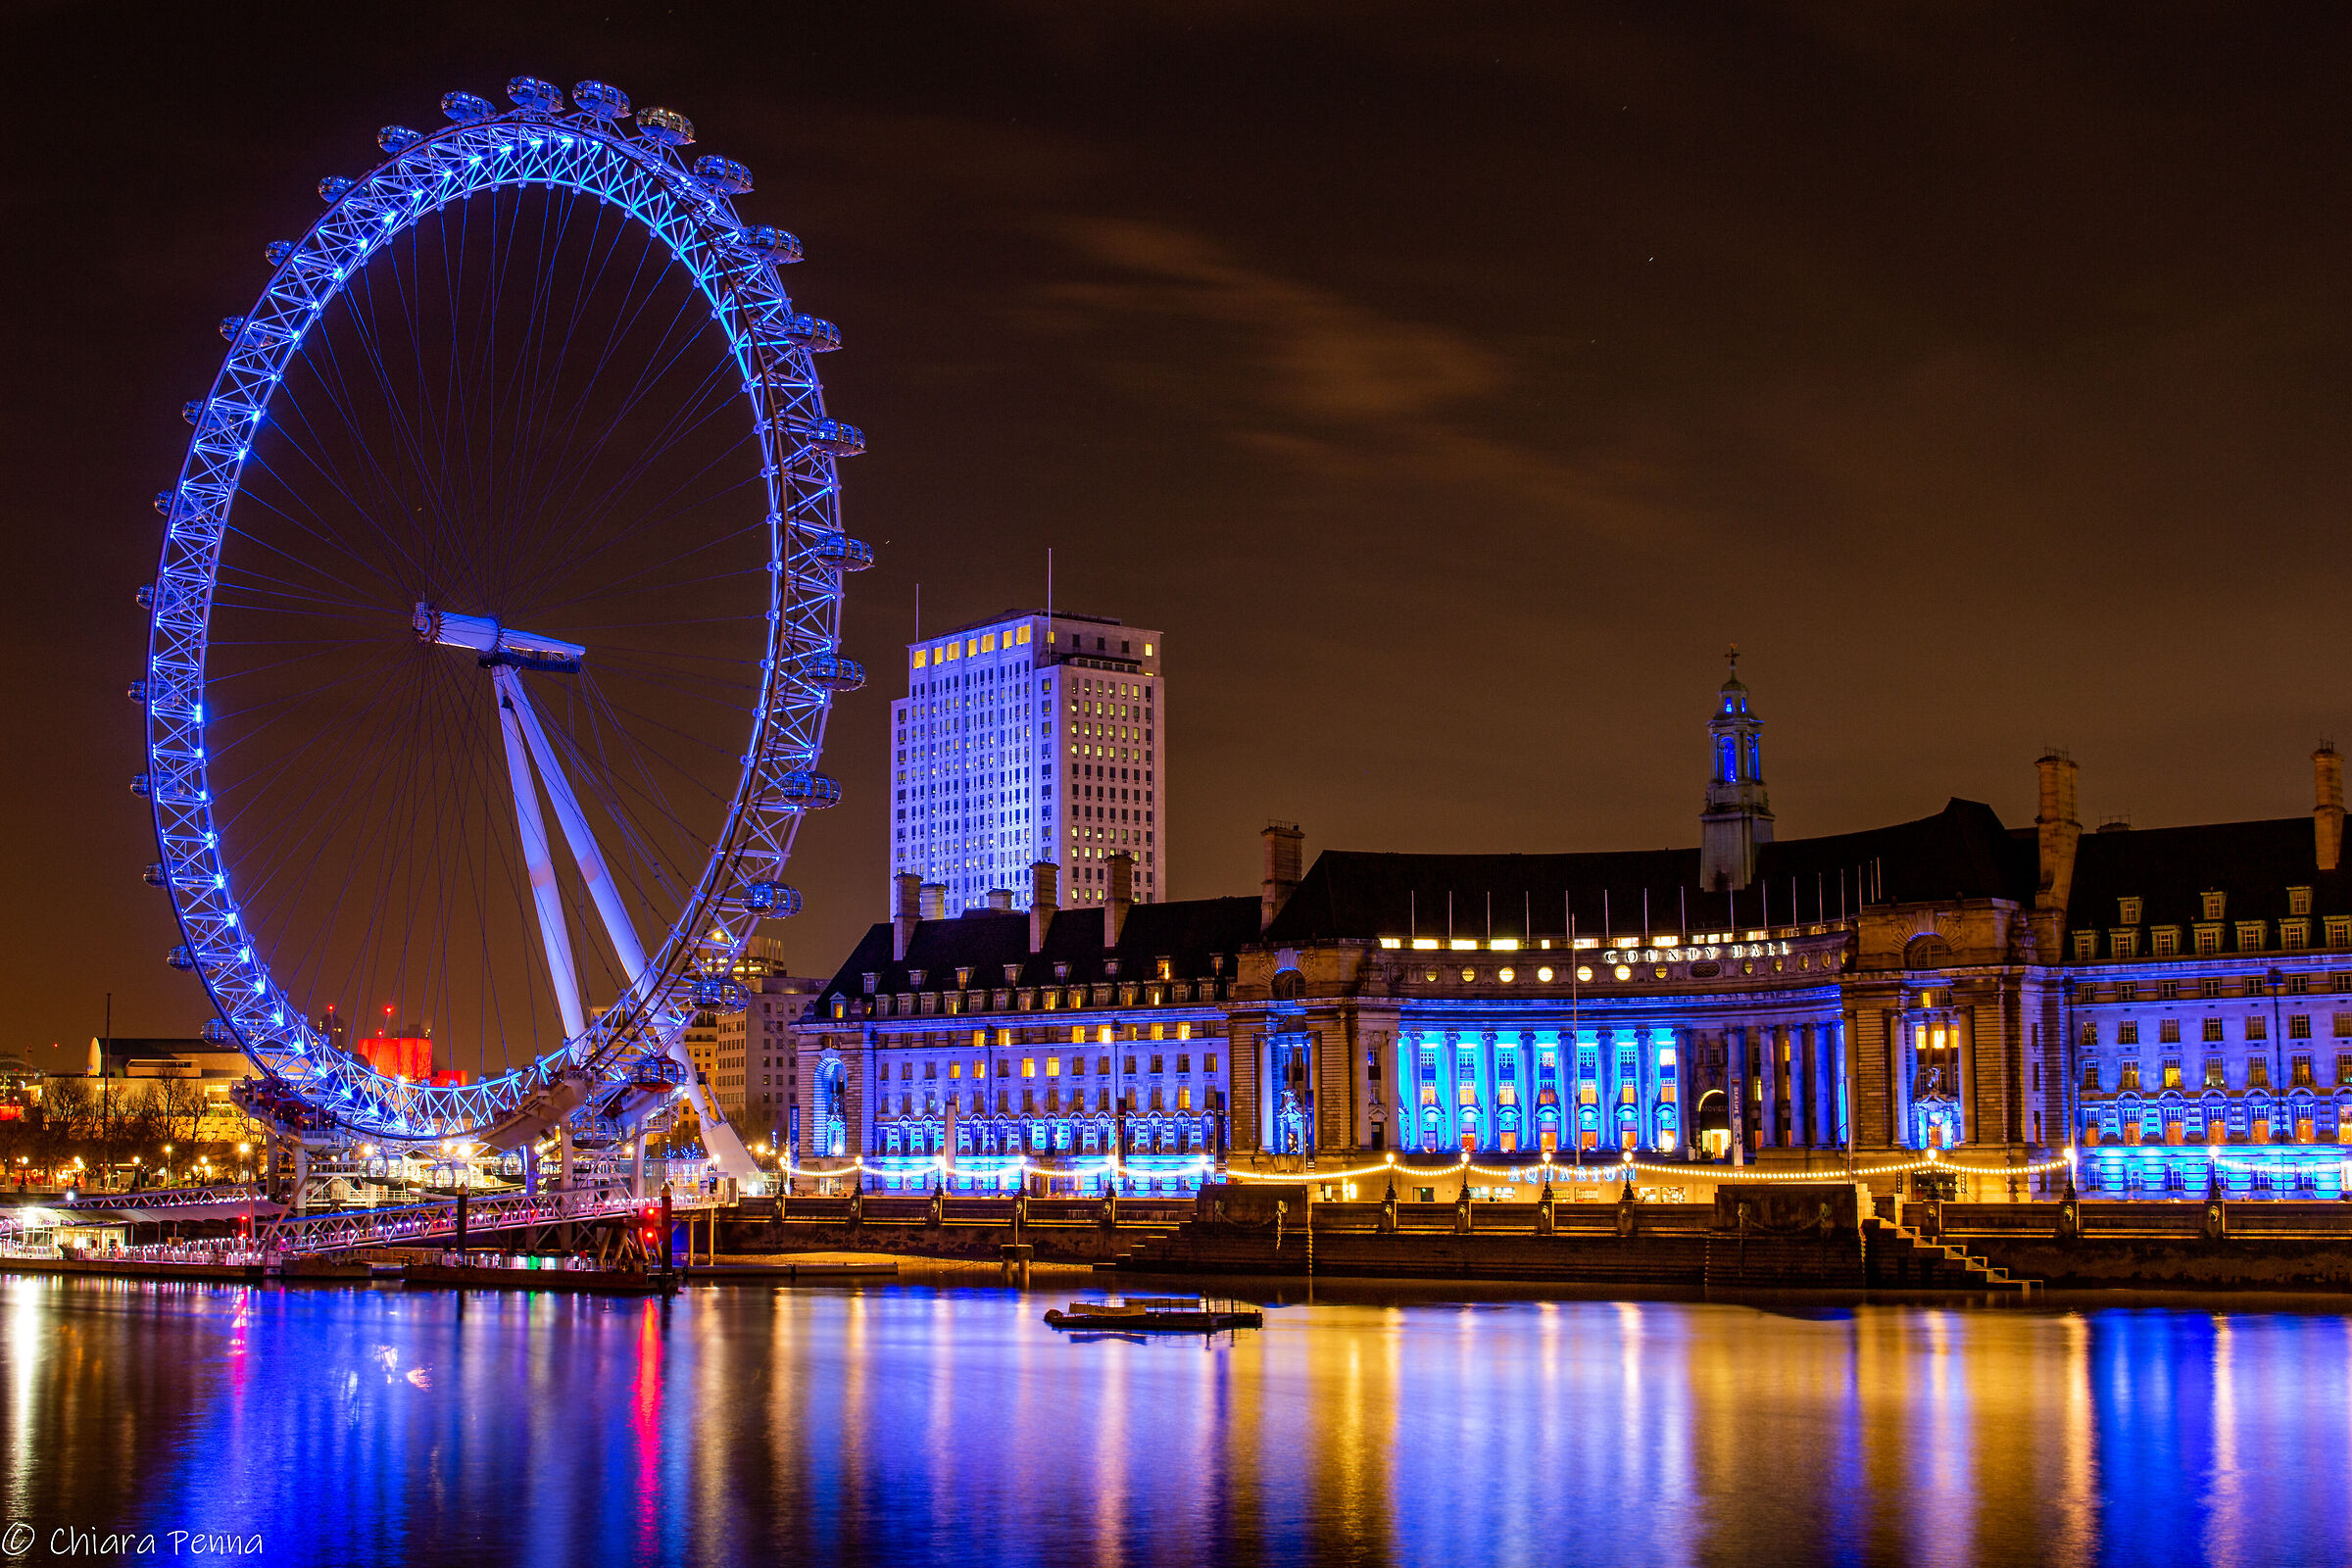 London eye by night...